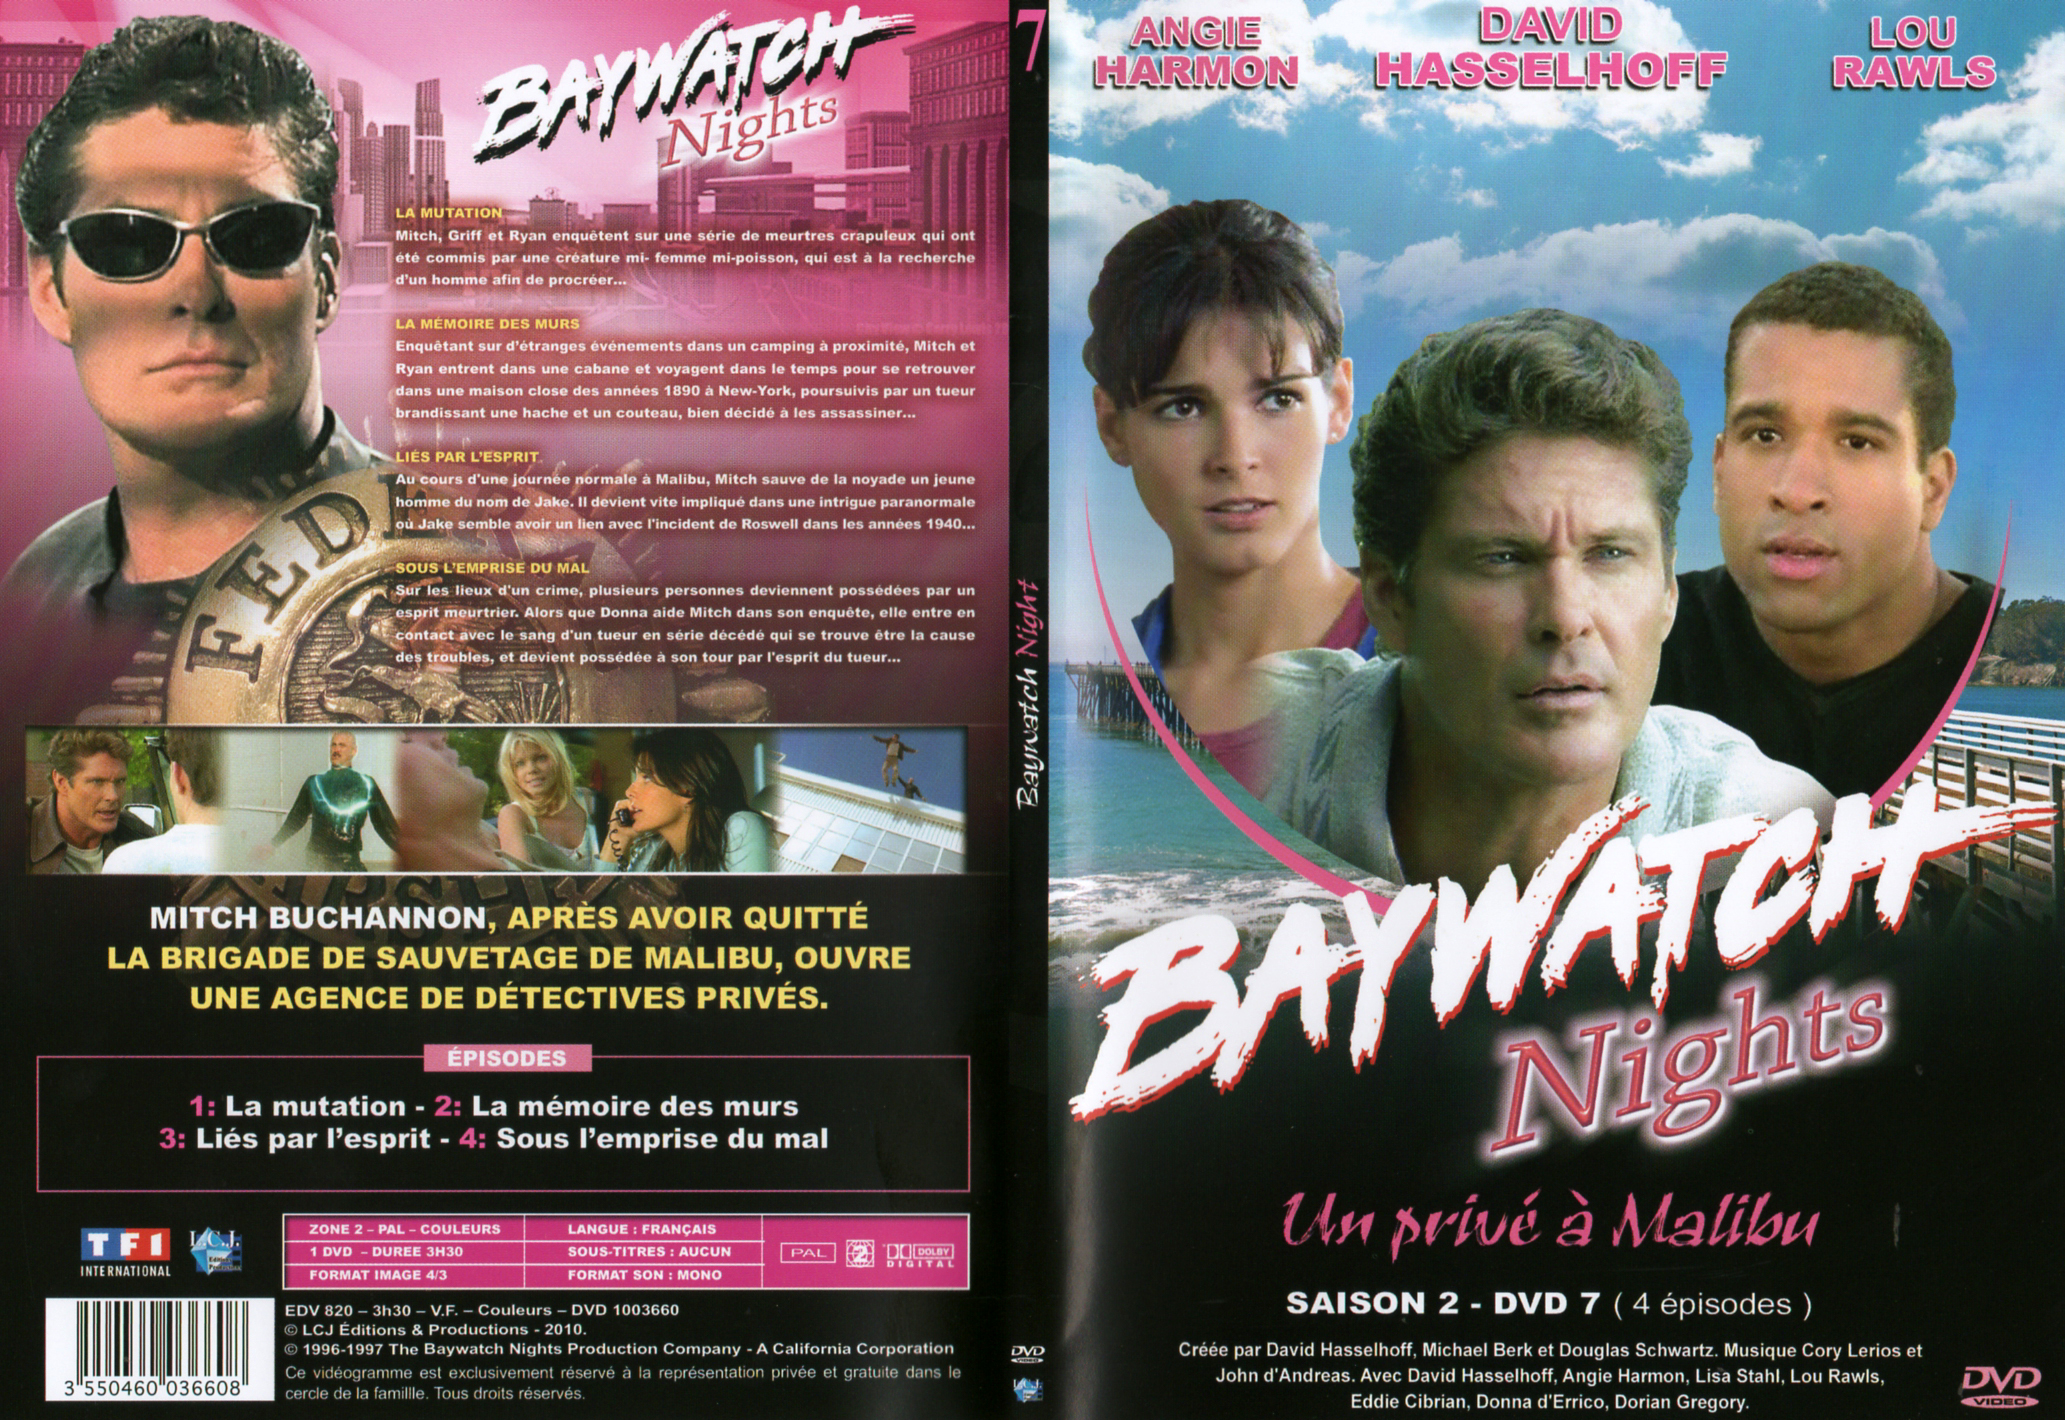 Jaquette DVD Baywatch nights Saison 2 DISC 7